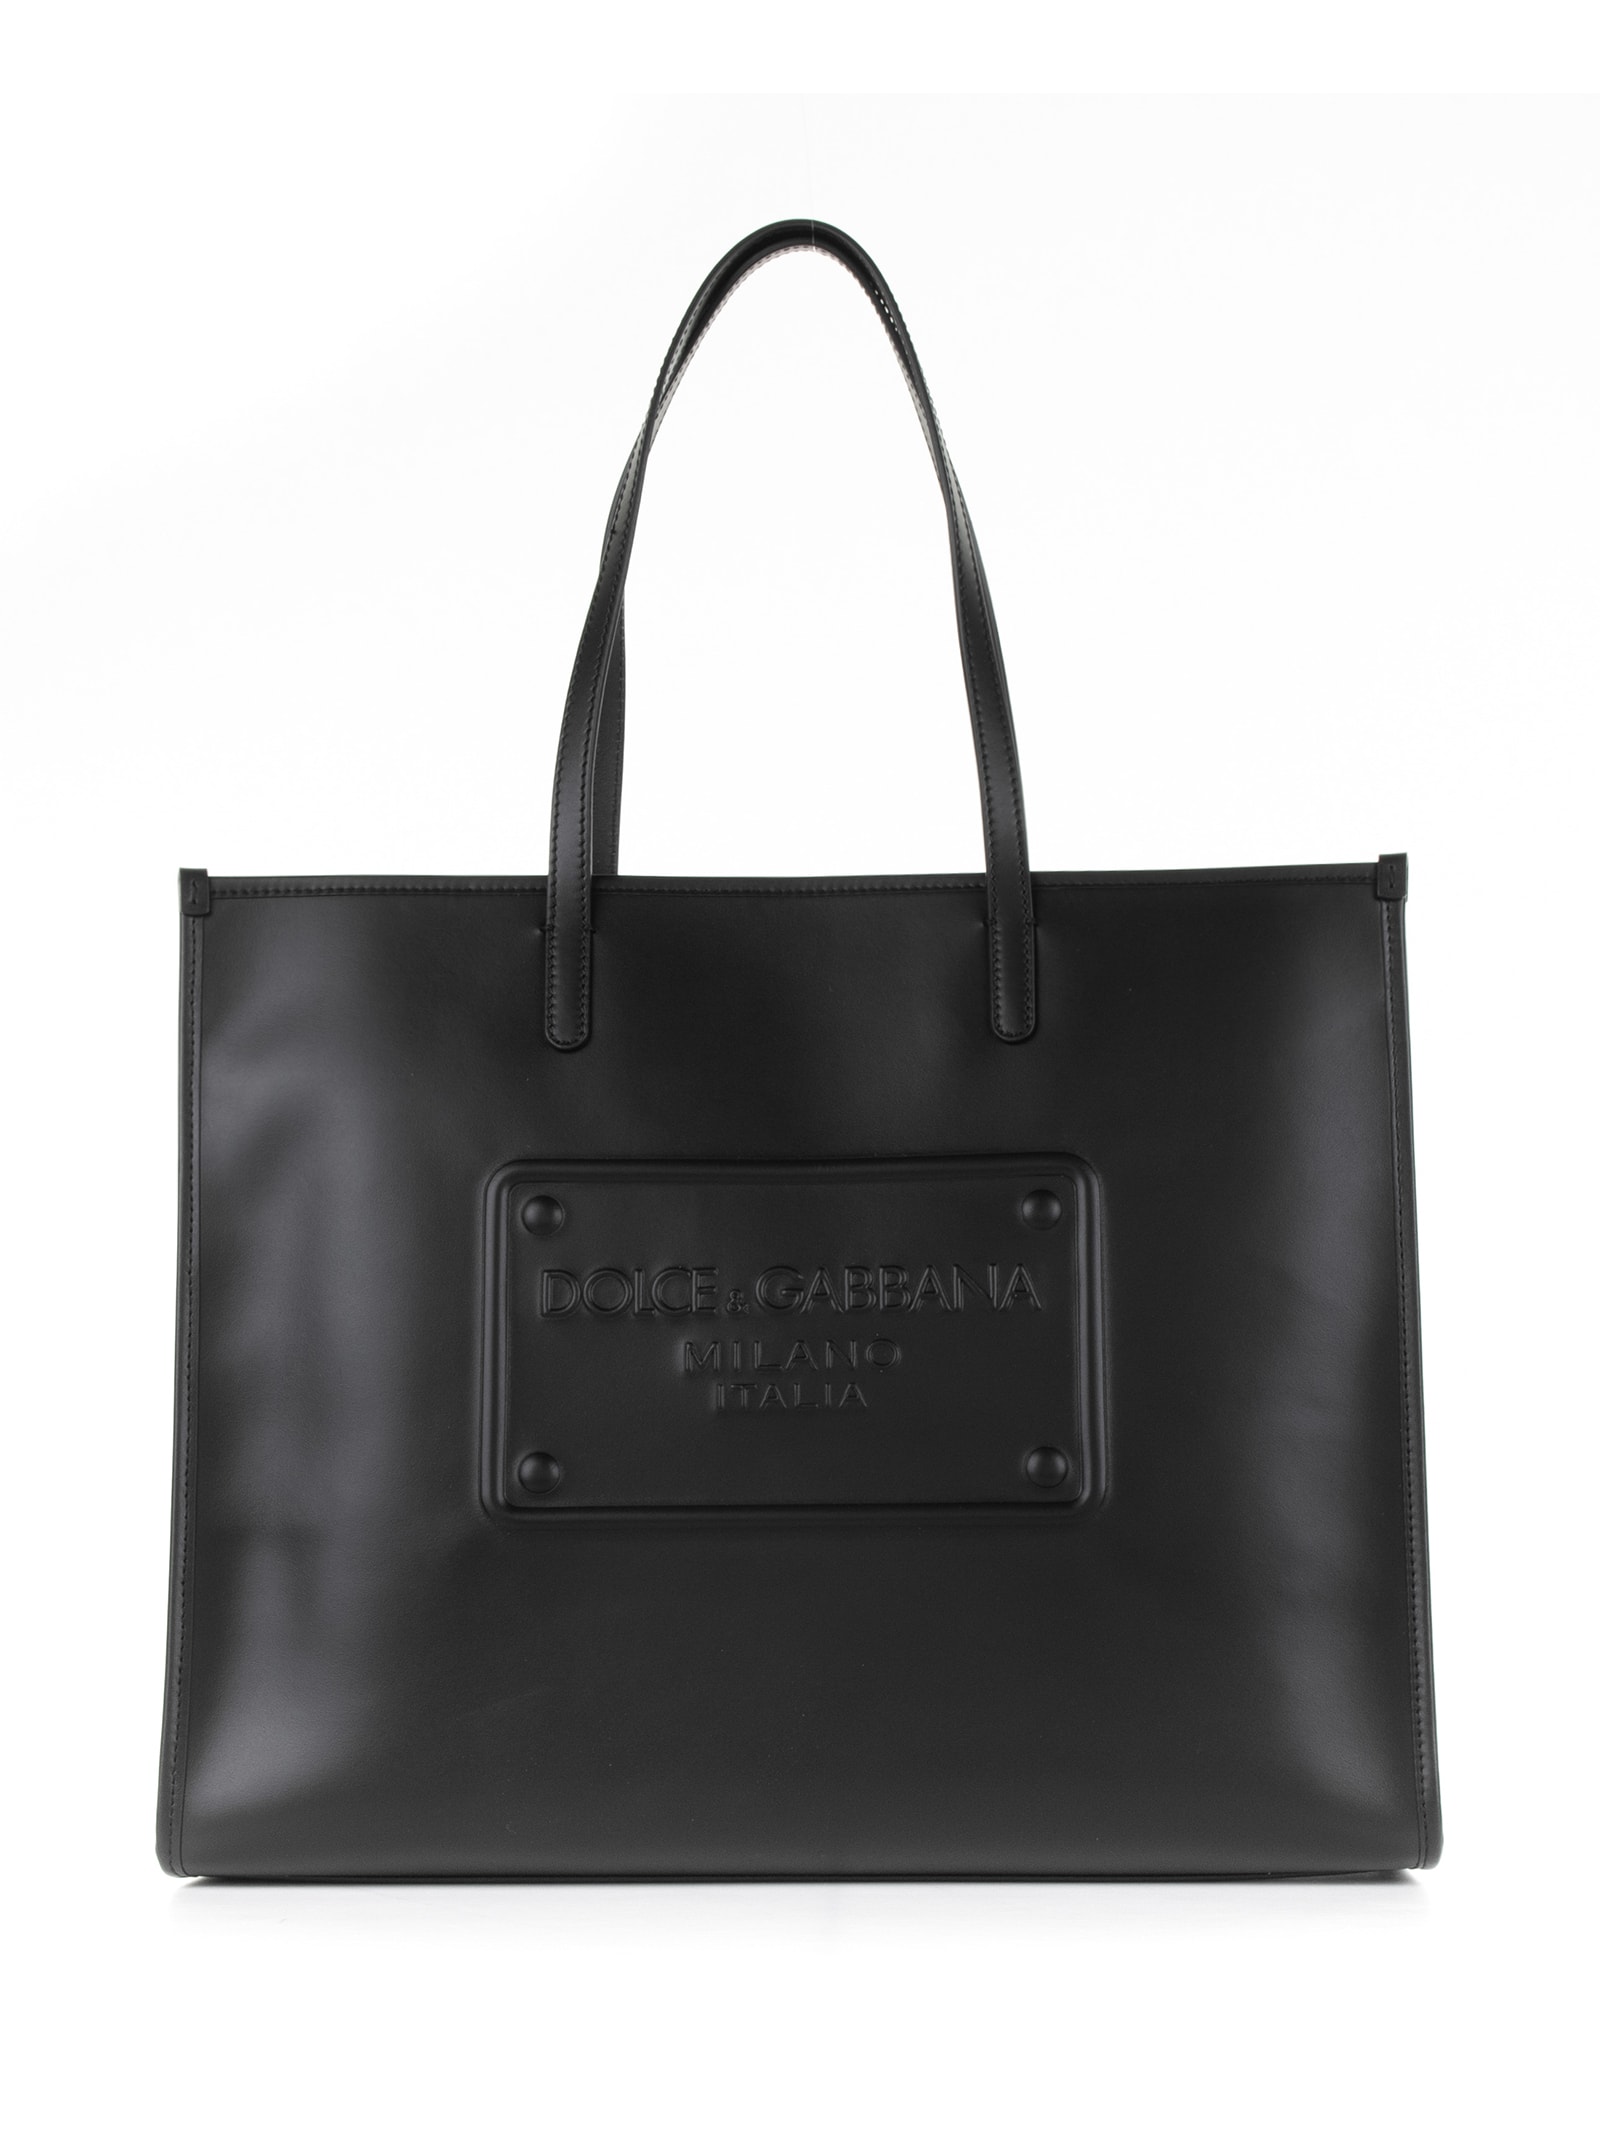 Dolce & Gabbana Logo Leather Large Tote Bag In Nero